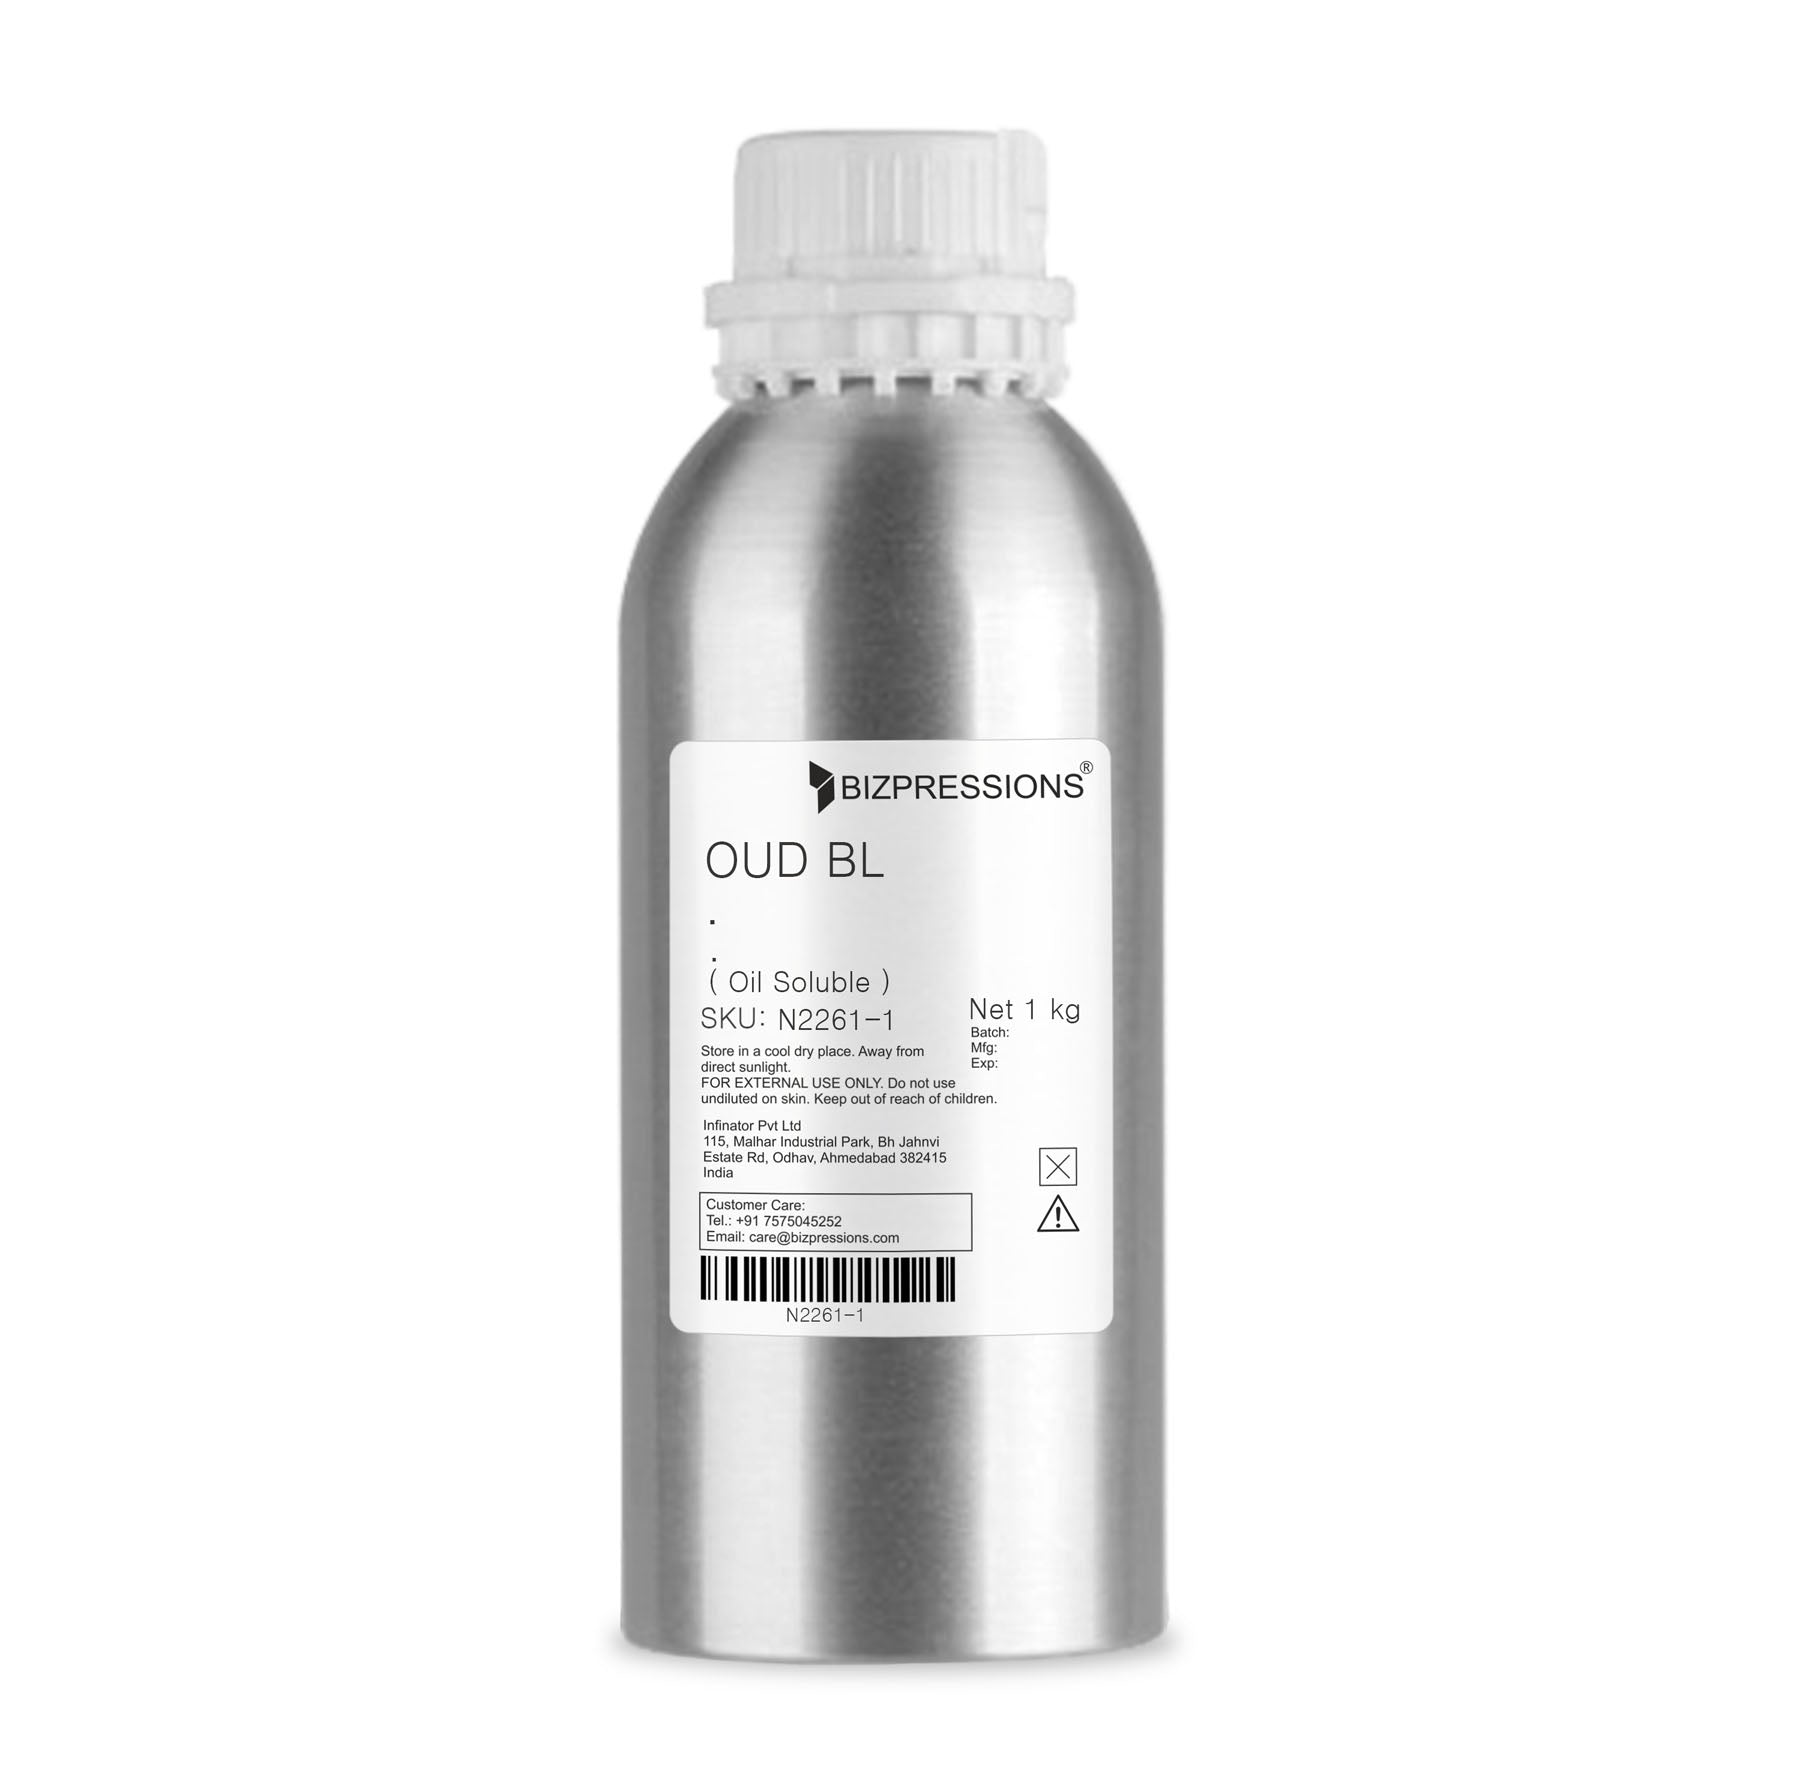 OUD BL - Fragrance ( Oil Soluble ) - 1 kg